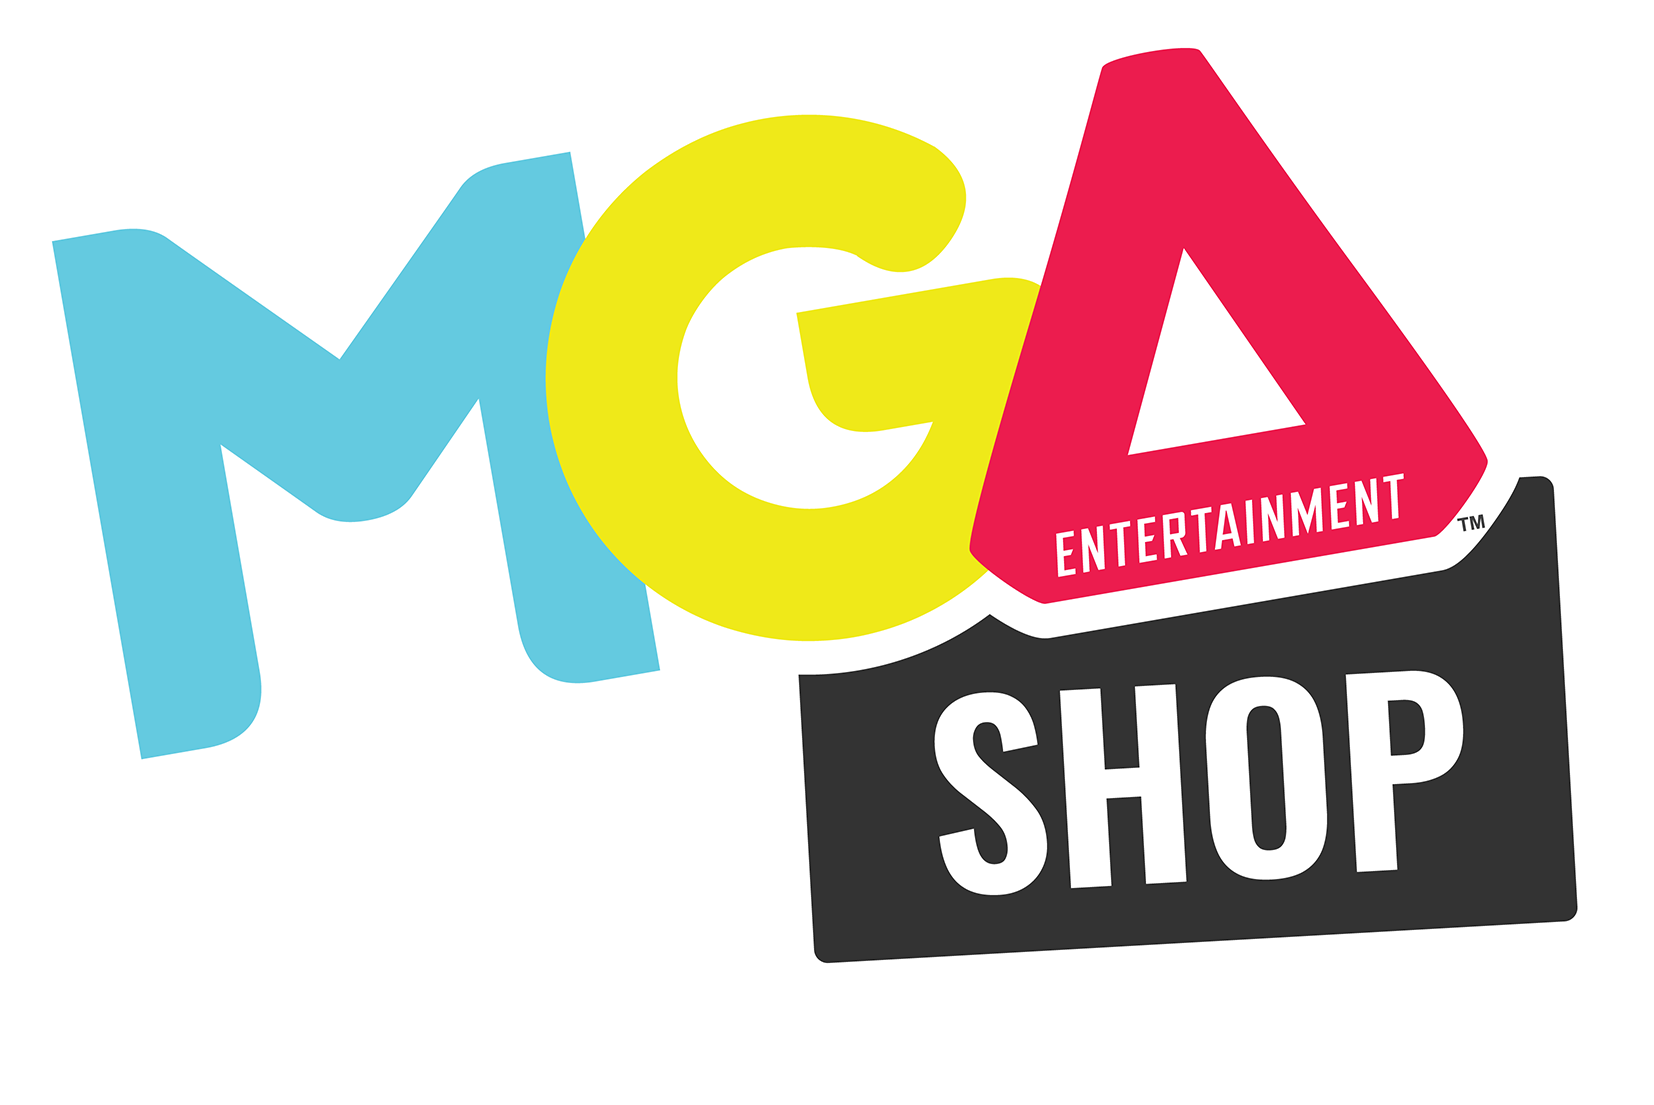 The MGA Shop Official Store logo